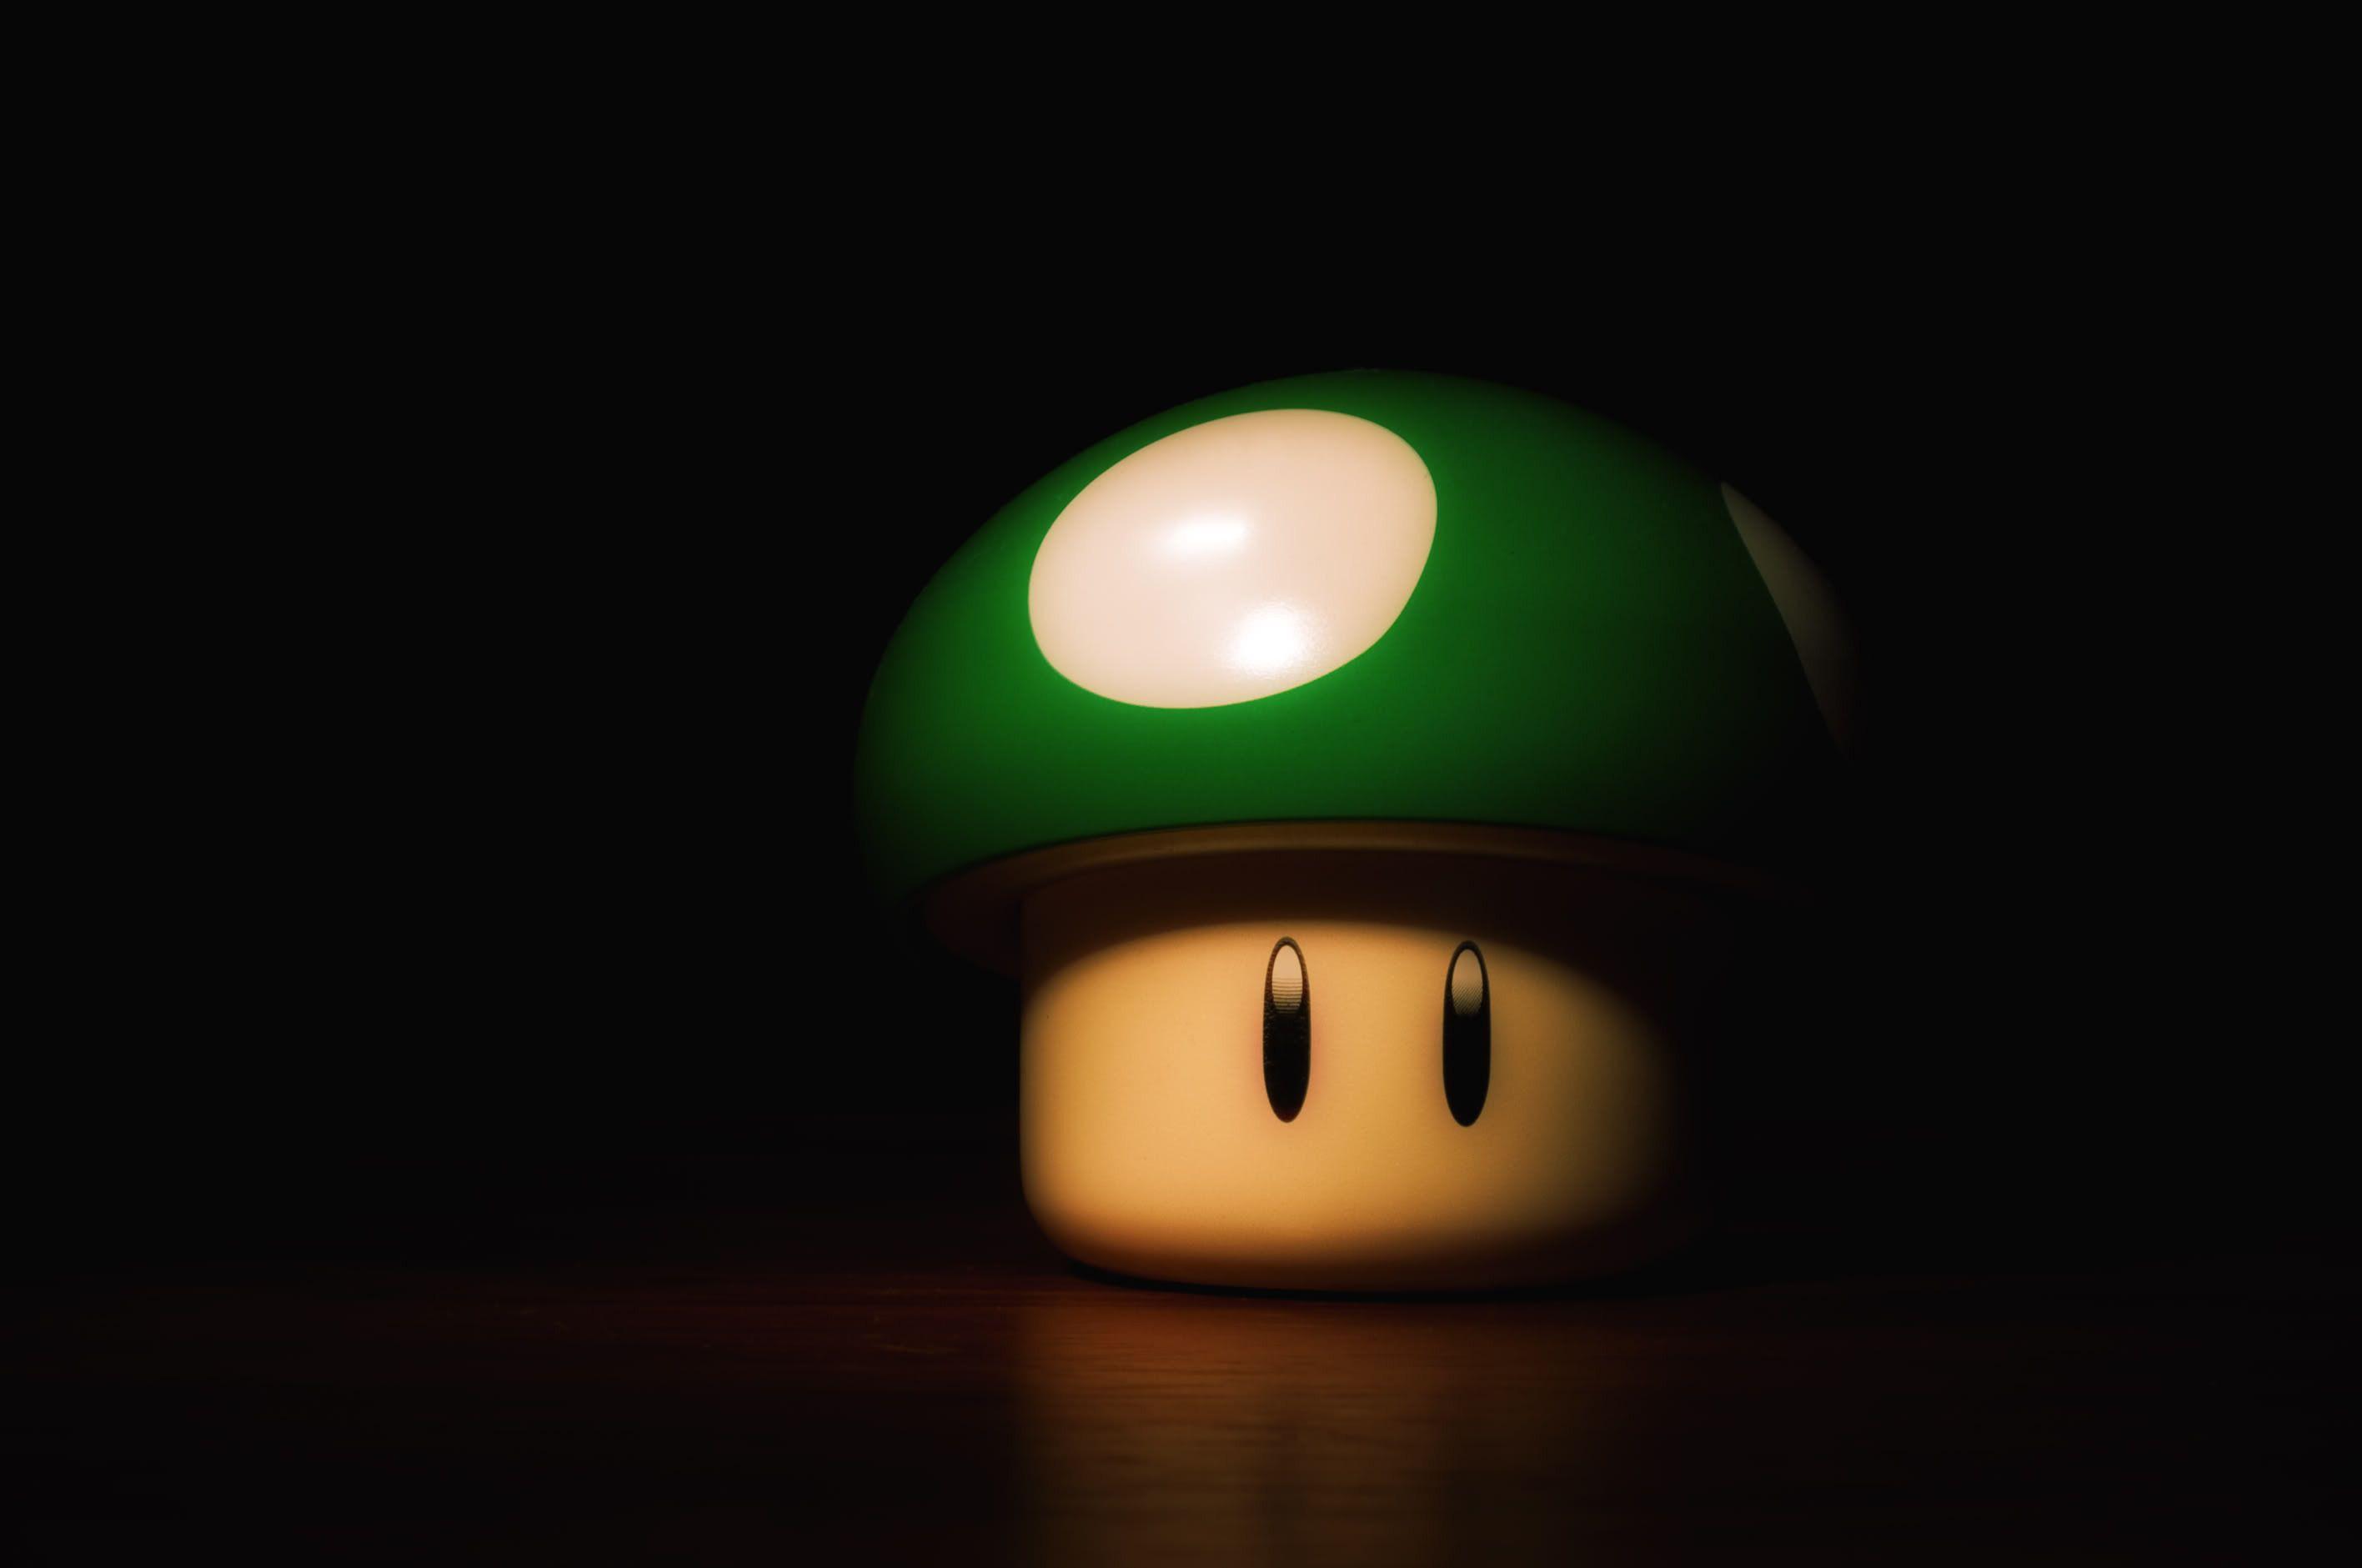 Download Cute Mushroom 3D Wallpaper Image HD Free 8901